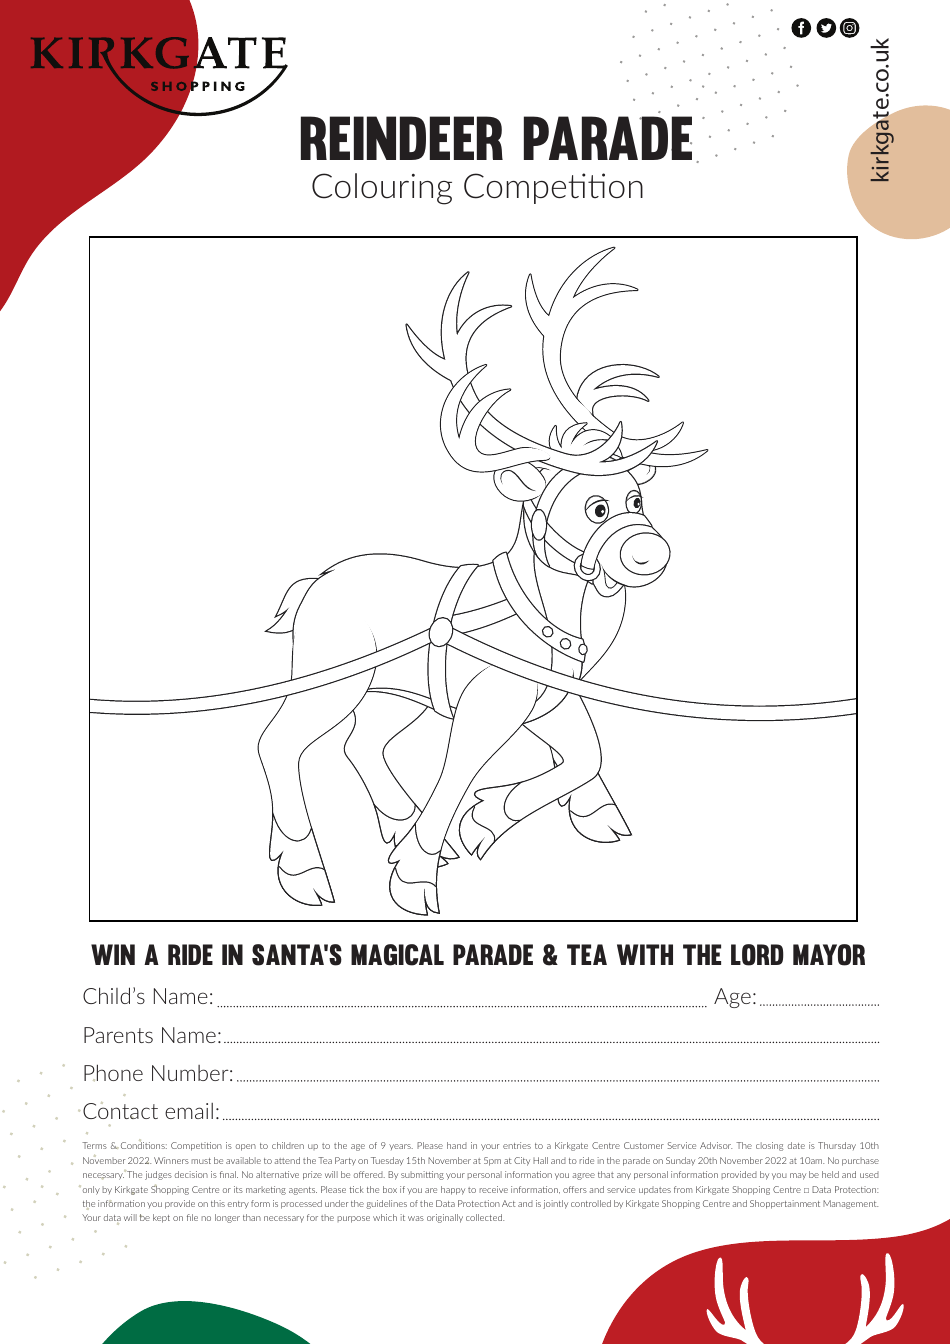 Reindeer Parade Coloring Page - Free Printable Coloring Sheet